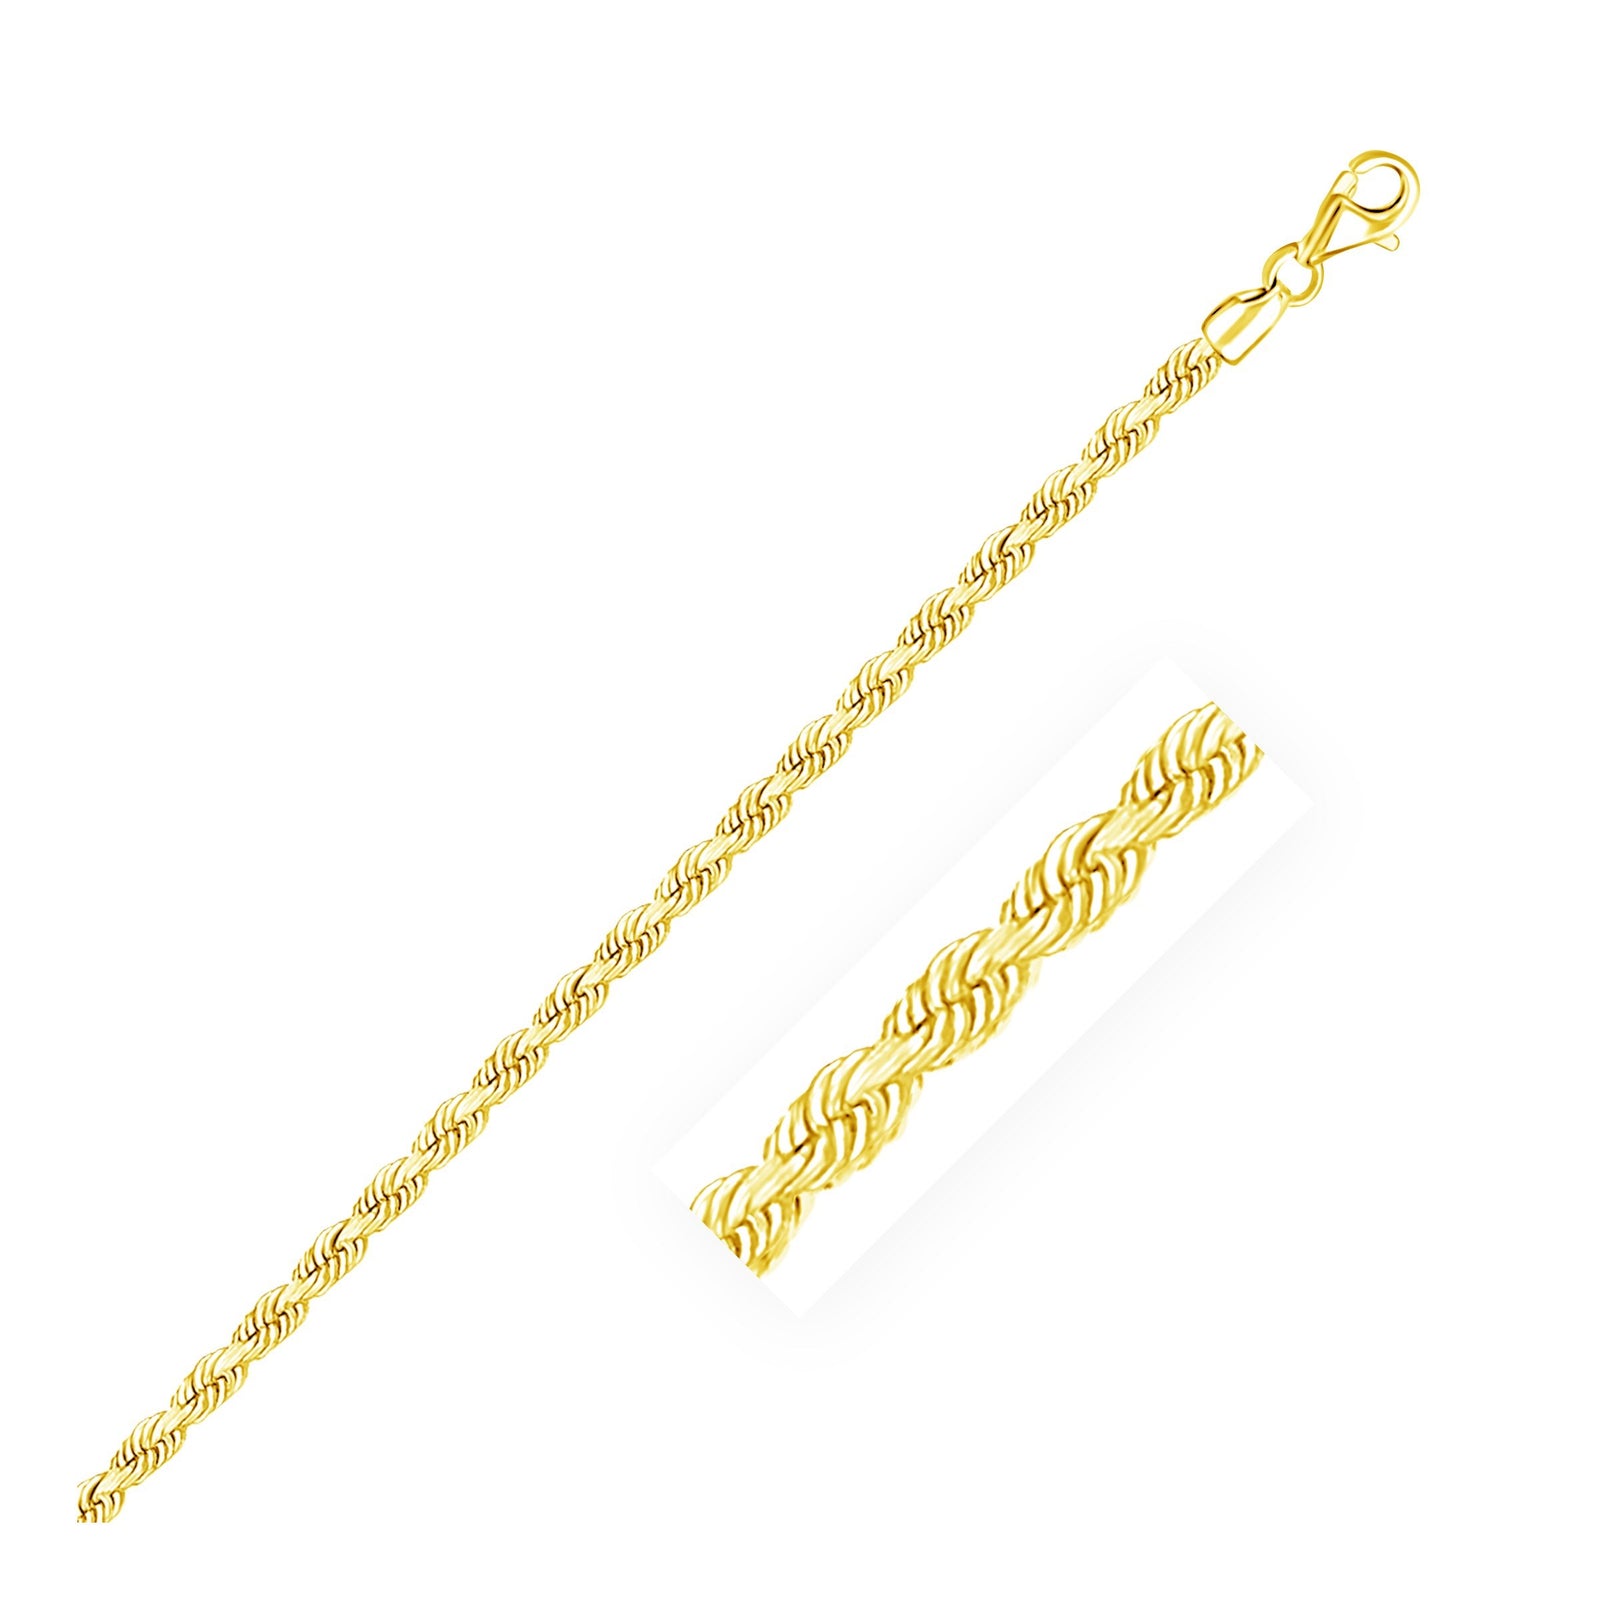 3.0mm 10k Yellow Gold Solid Diamond Cut Rope Bracelet